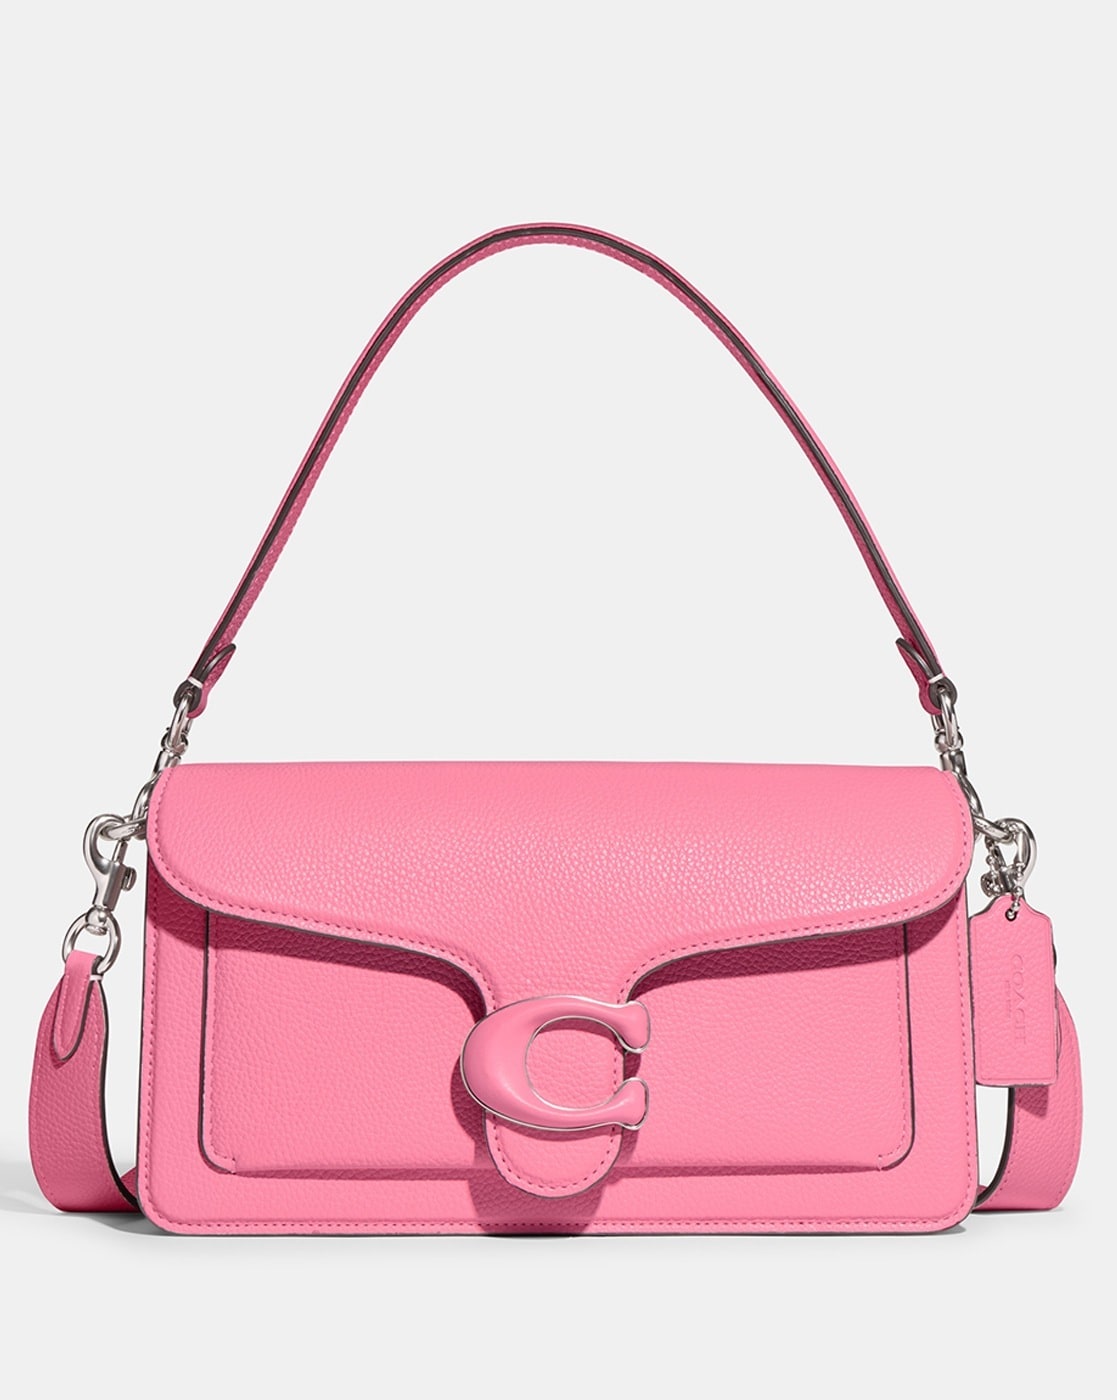 Coach Designer Rose Pink Leather Satchel/Top Handle Bag Crossbody Purse |  eBay